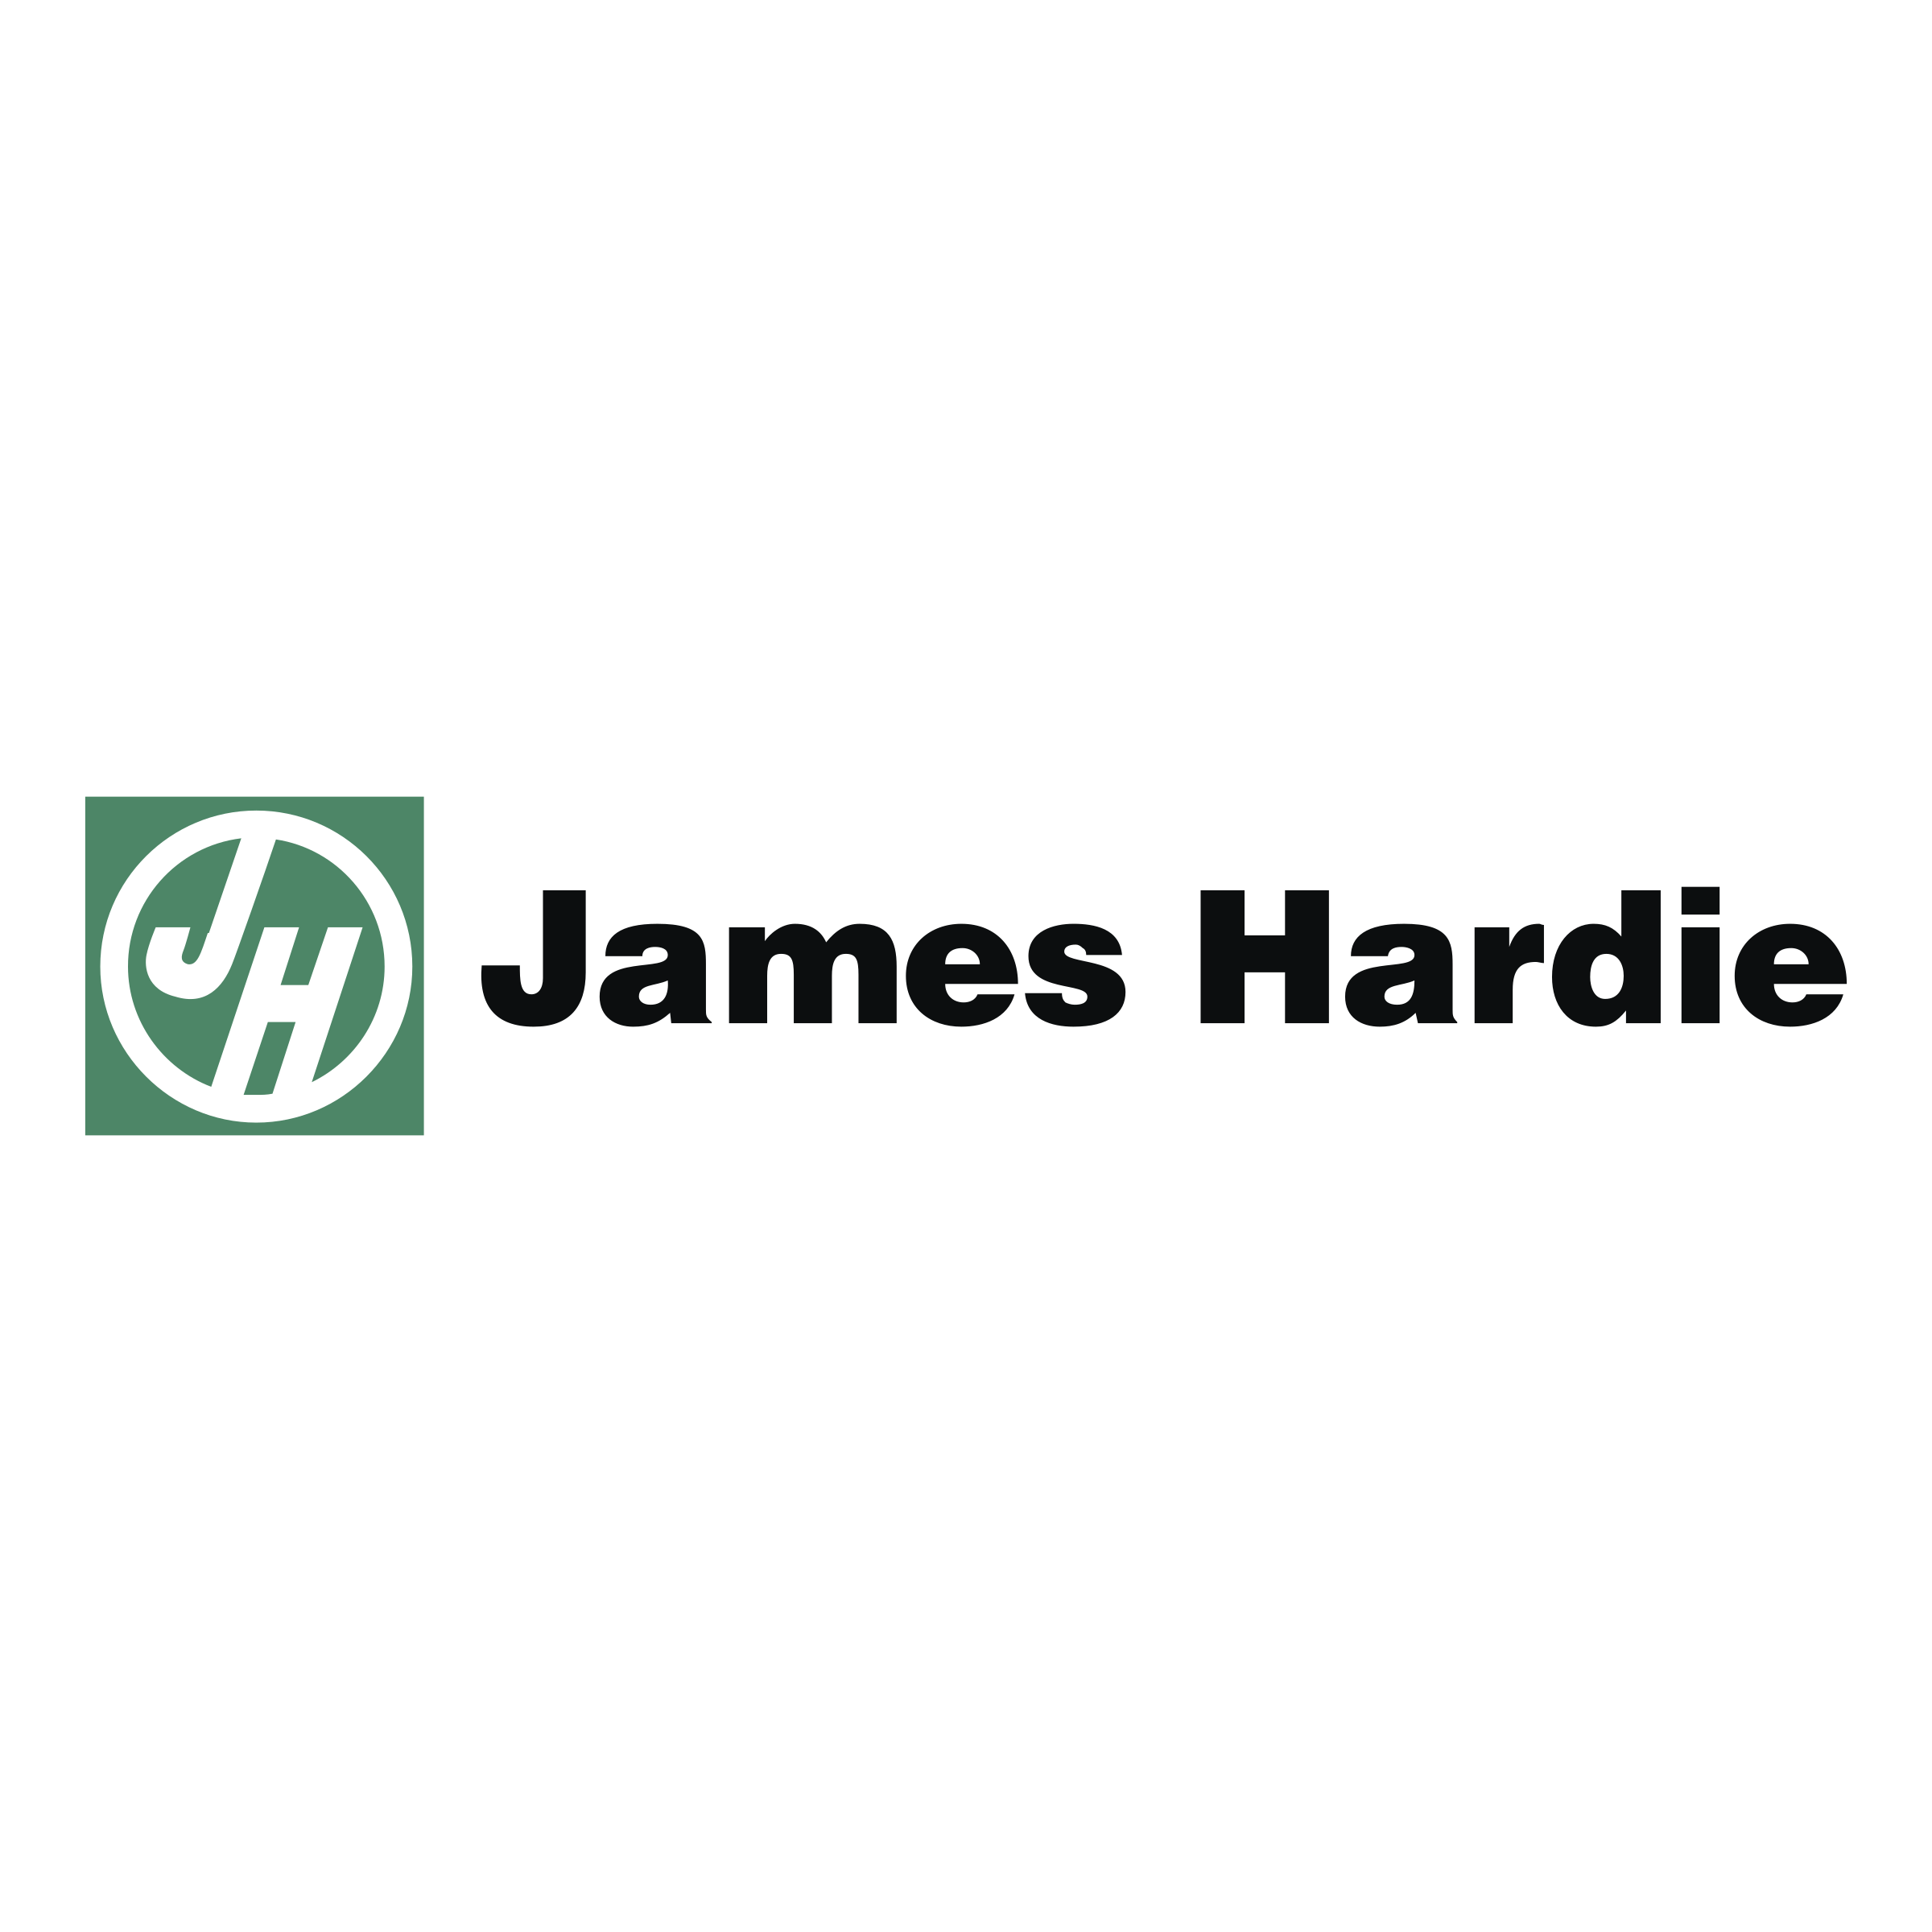 james-hardie - Hardiplank -1-logo-png-transparent